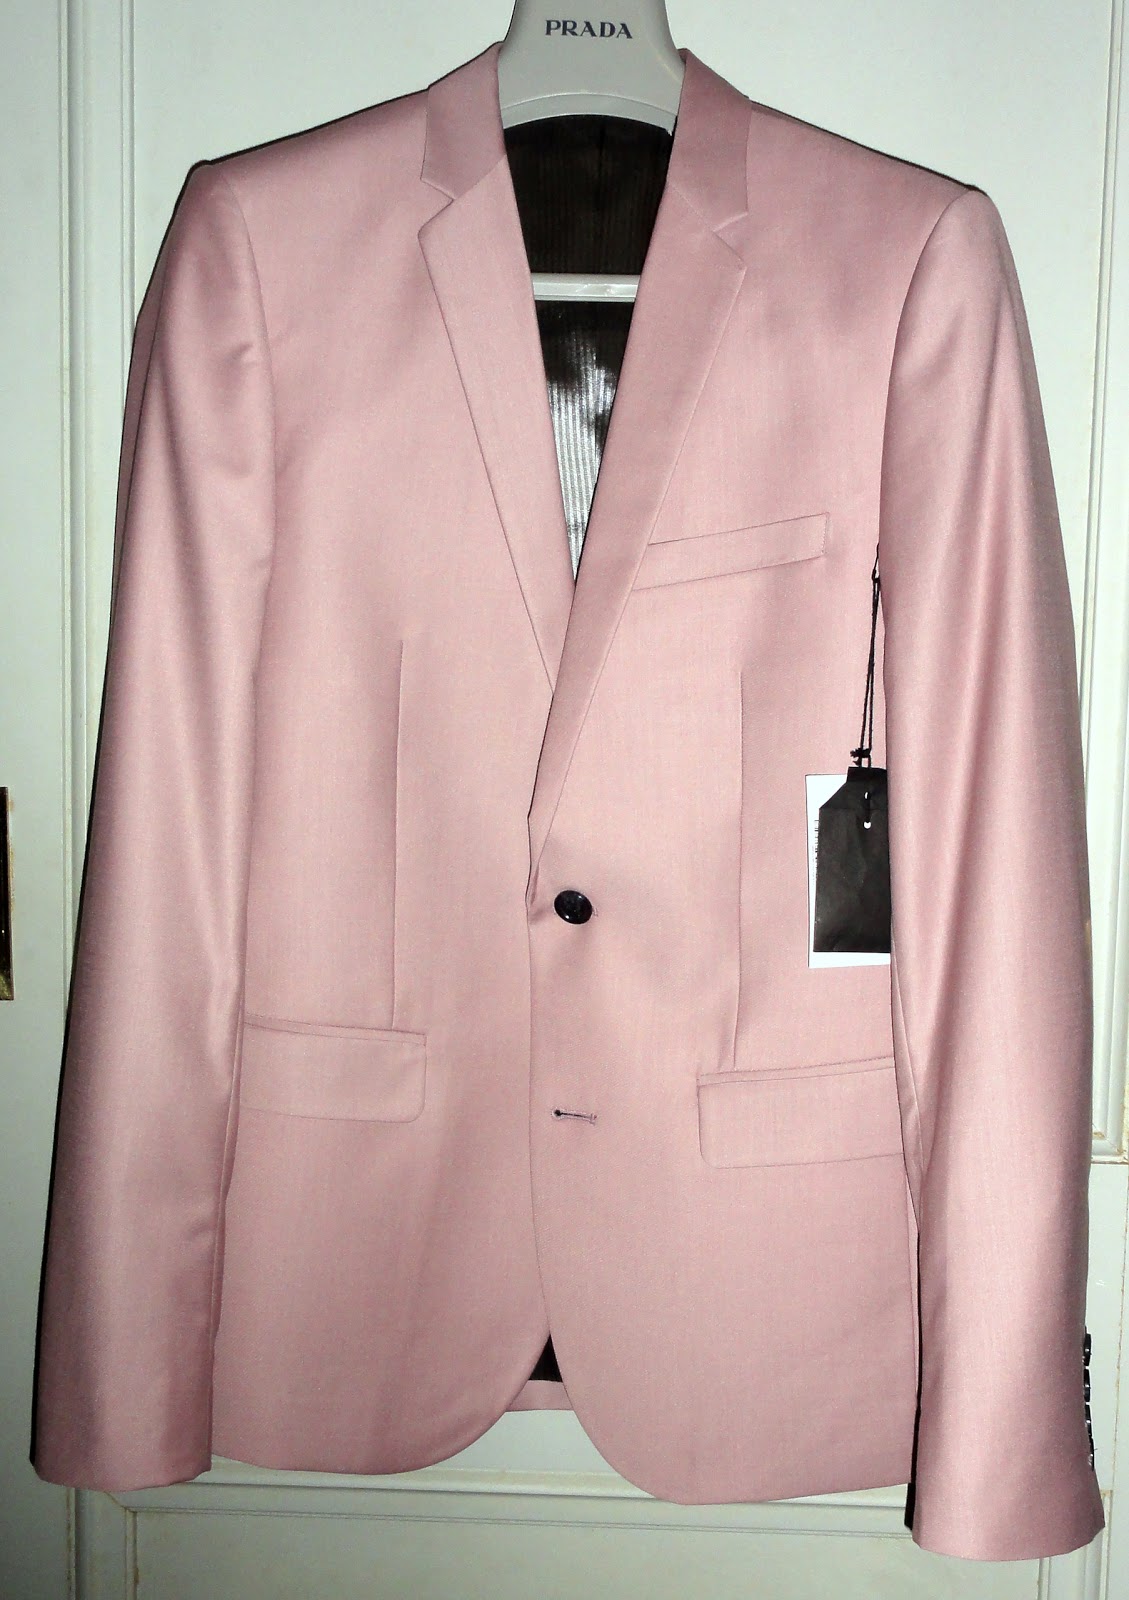 Le GRAND STYLIST: Recent purchase: a pink suit jacket